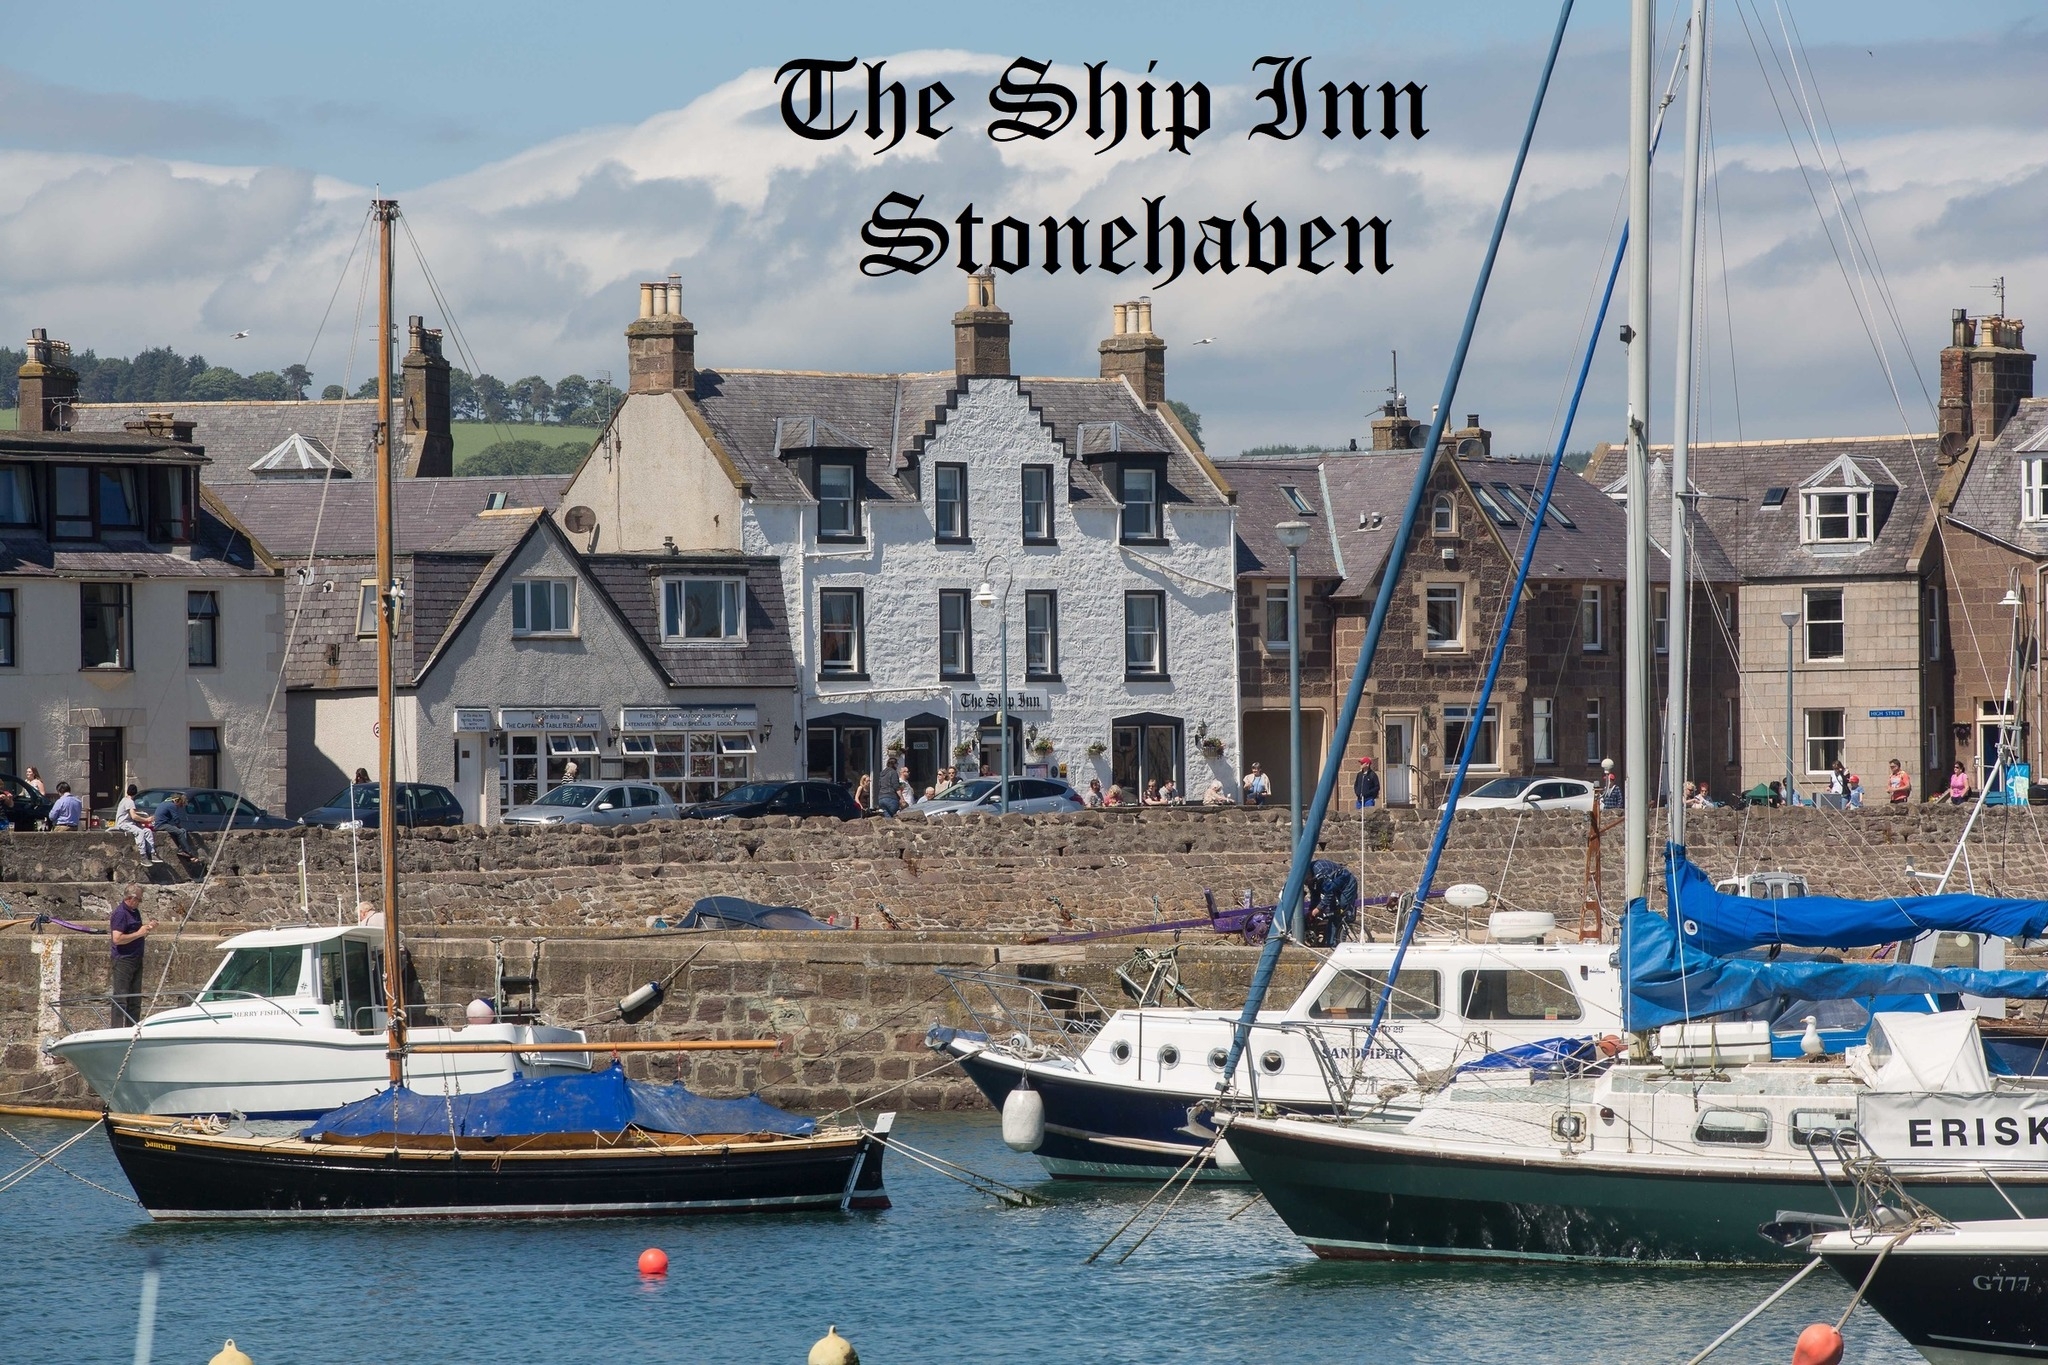 Main photo for The Ship Inn